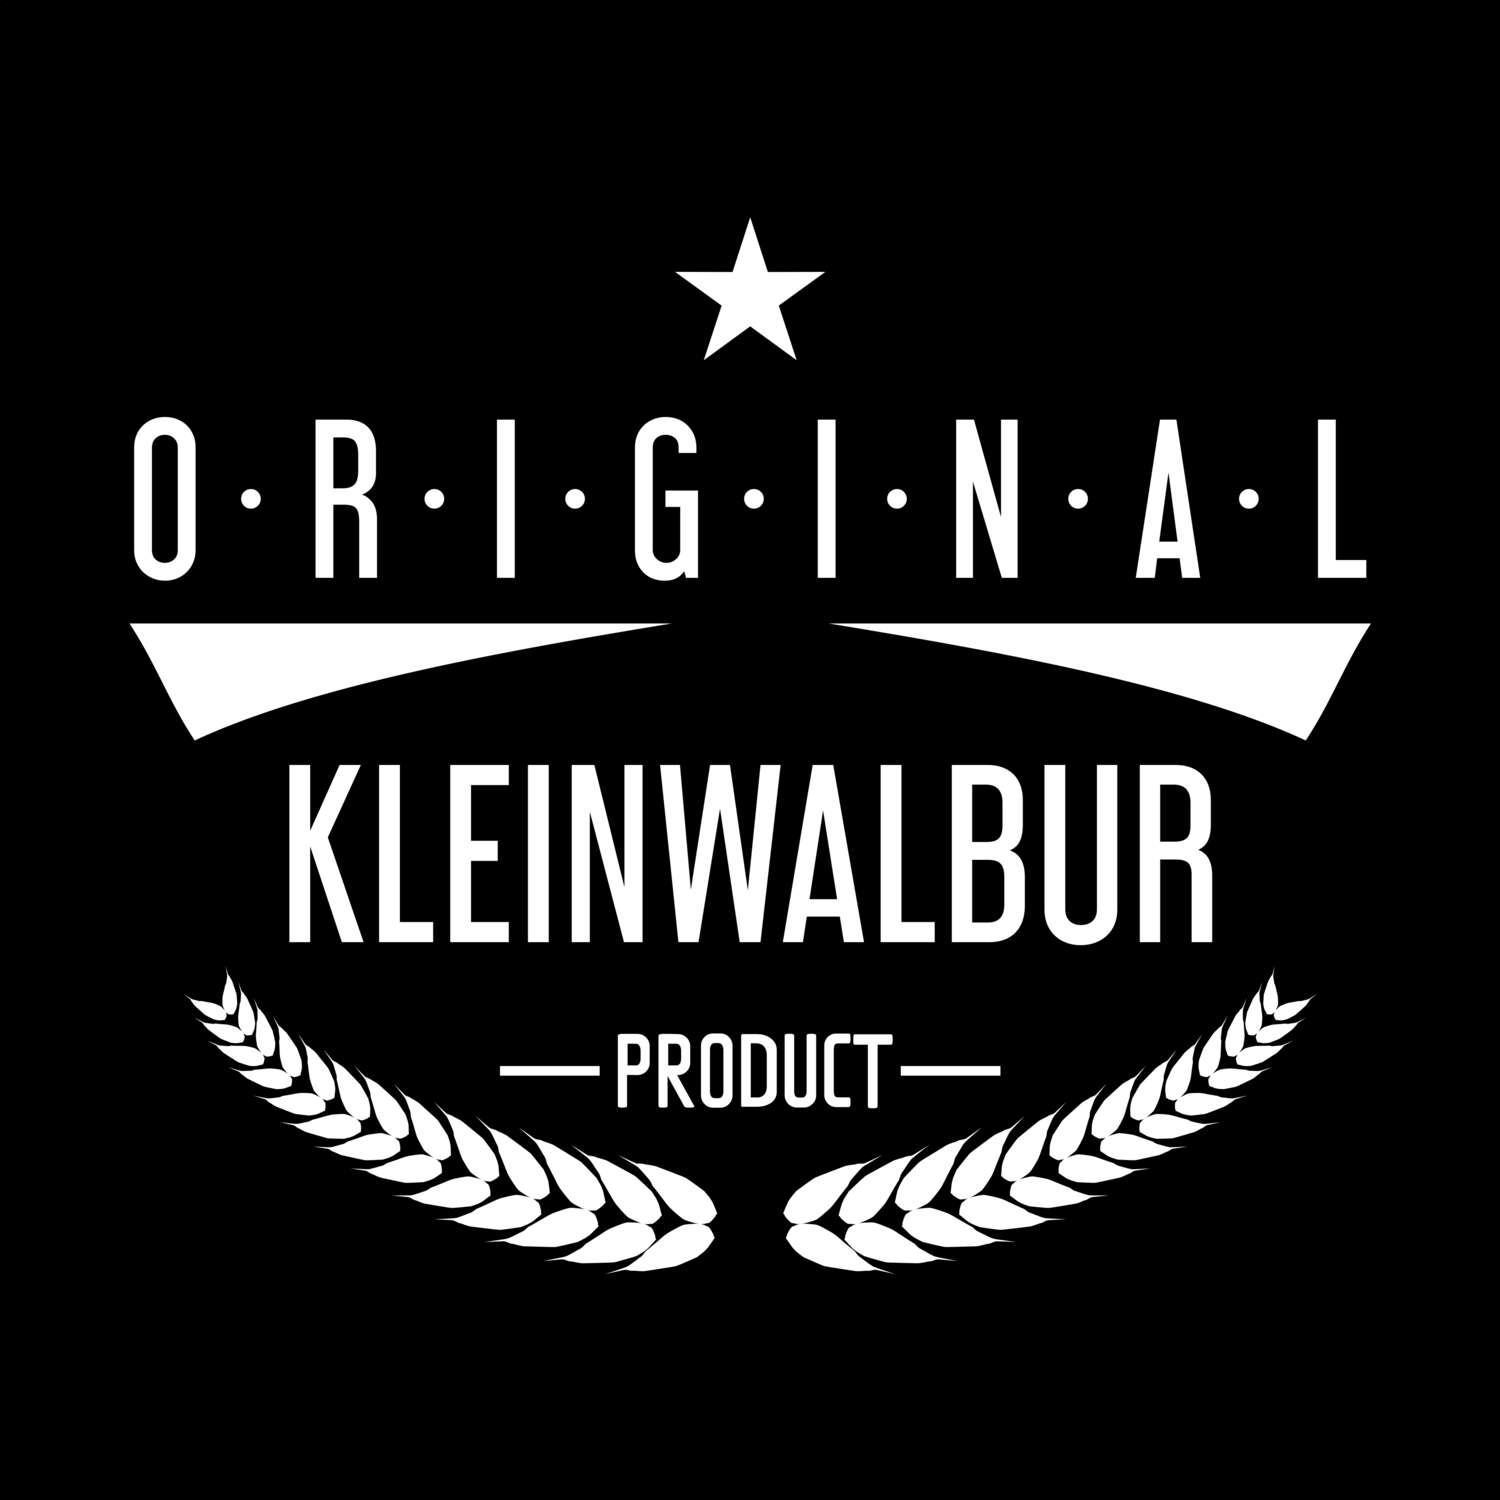 Kleinwalbur T-Shirt »Original Product«